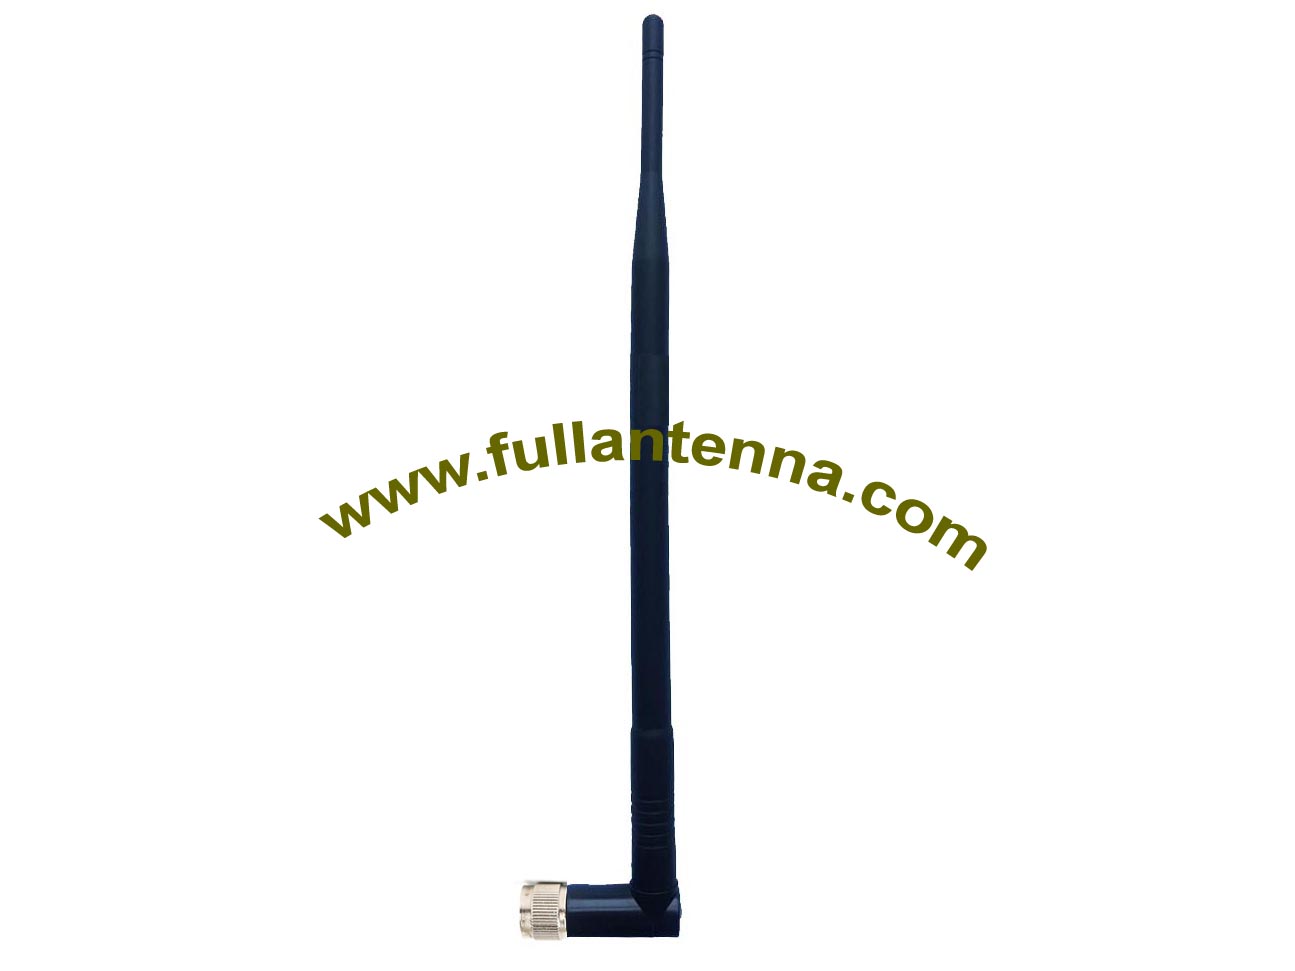 P/N:FA2400.7dbi,WiFi/2.4G Rubber Antenna,7dbi gain